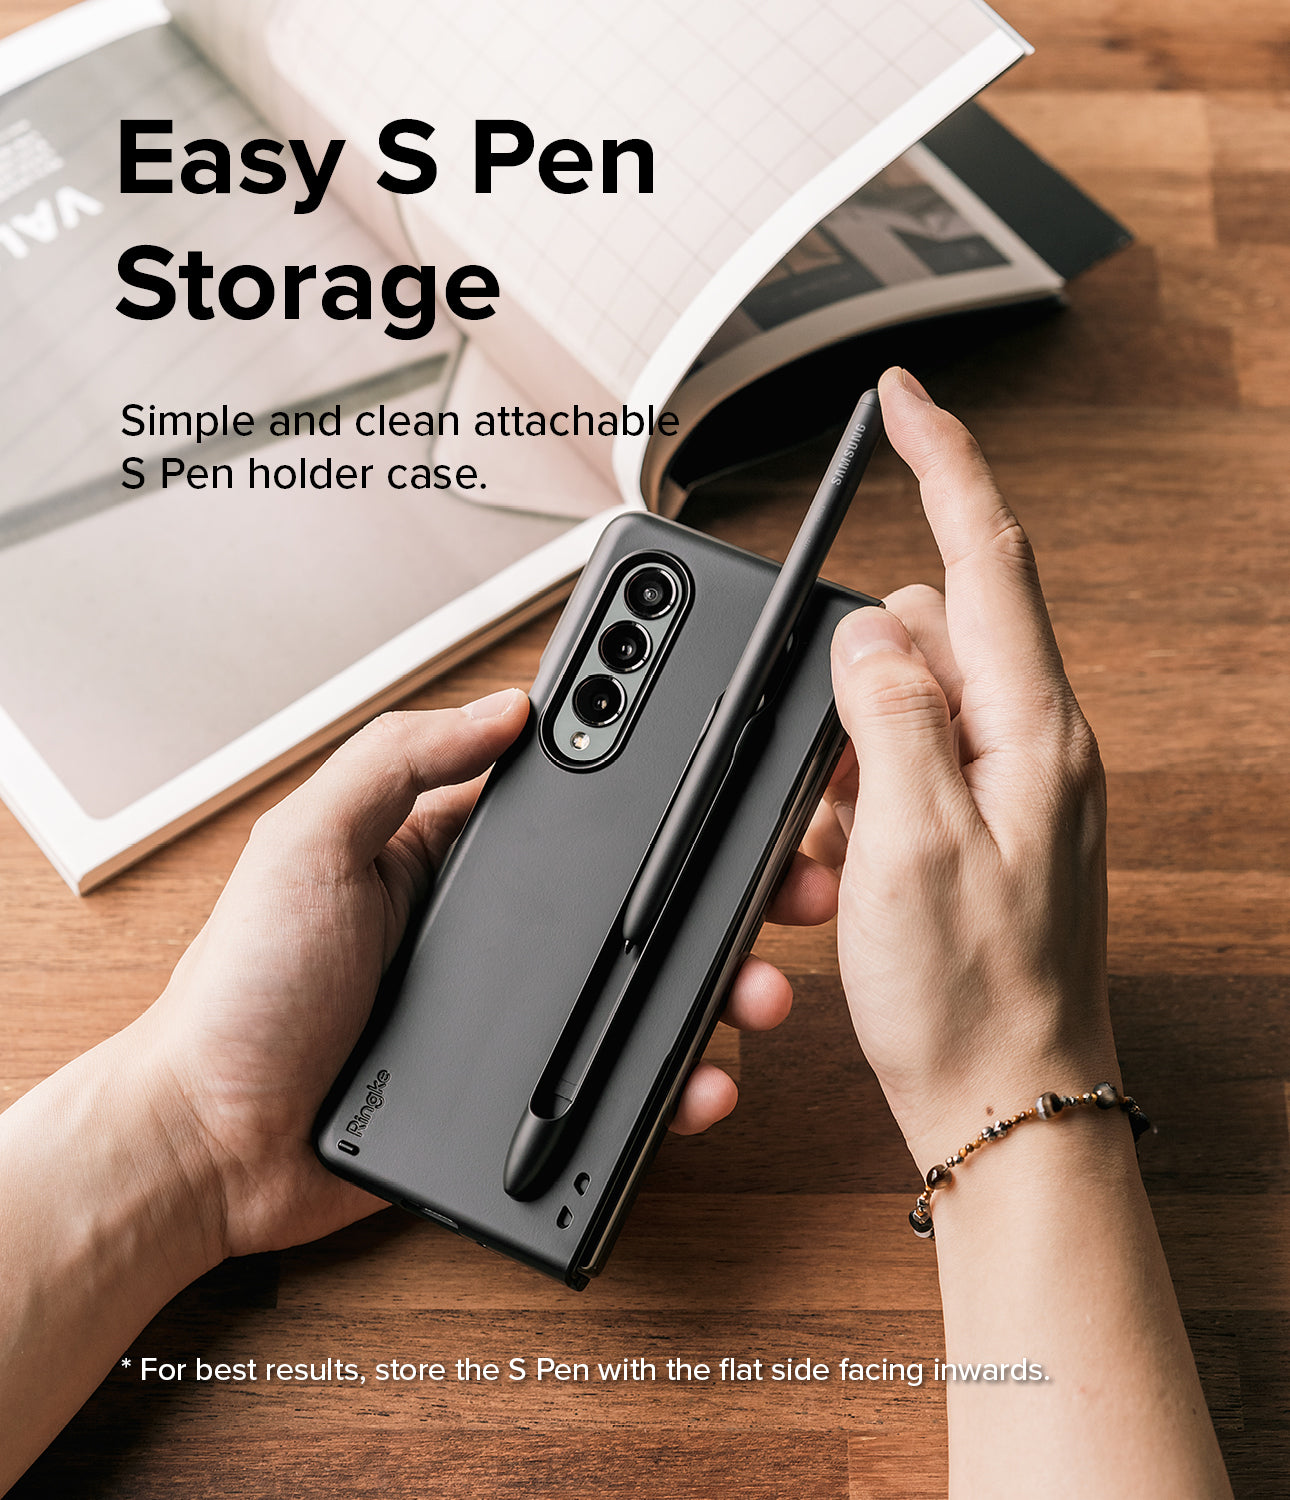 Galaxy S Pen (Fold Edition) Holder | Slim